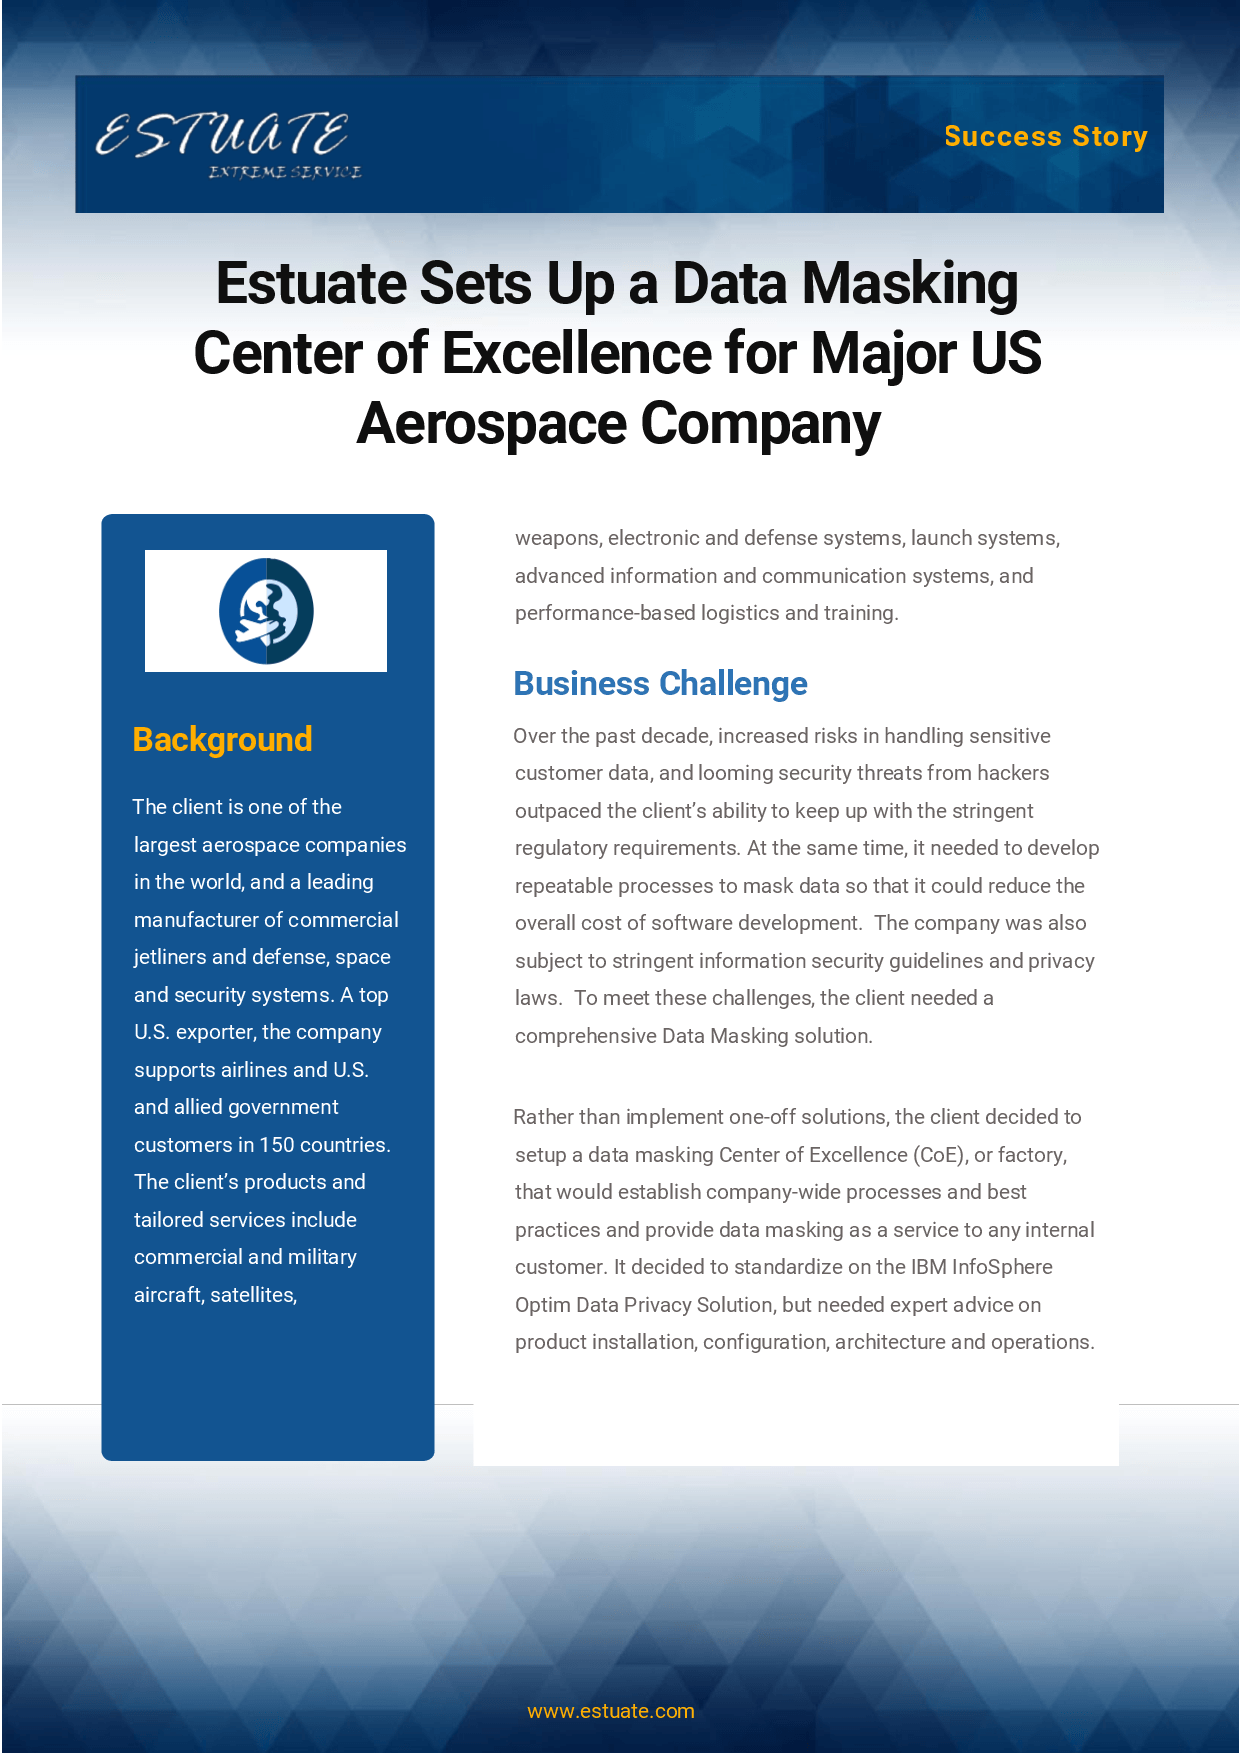 Us Aerospace Company Logo - Estuate Sets Up a Data Masking Center of Excellence